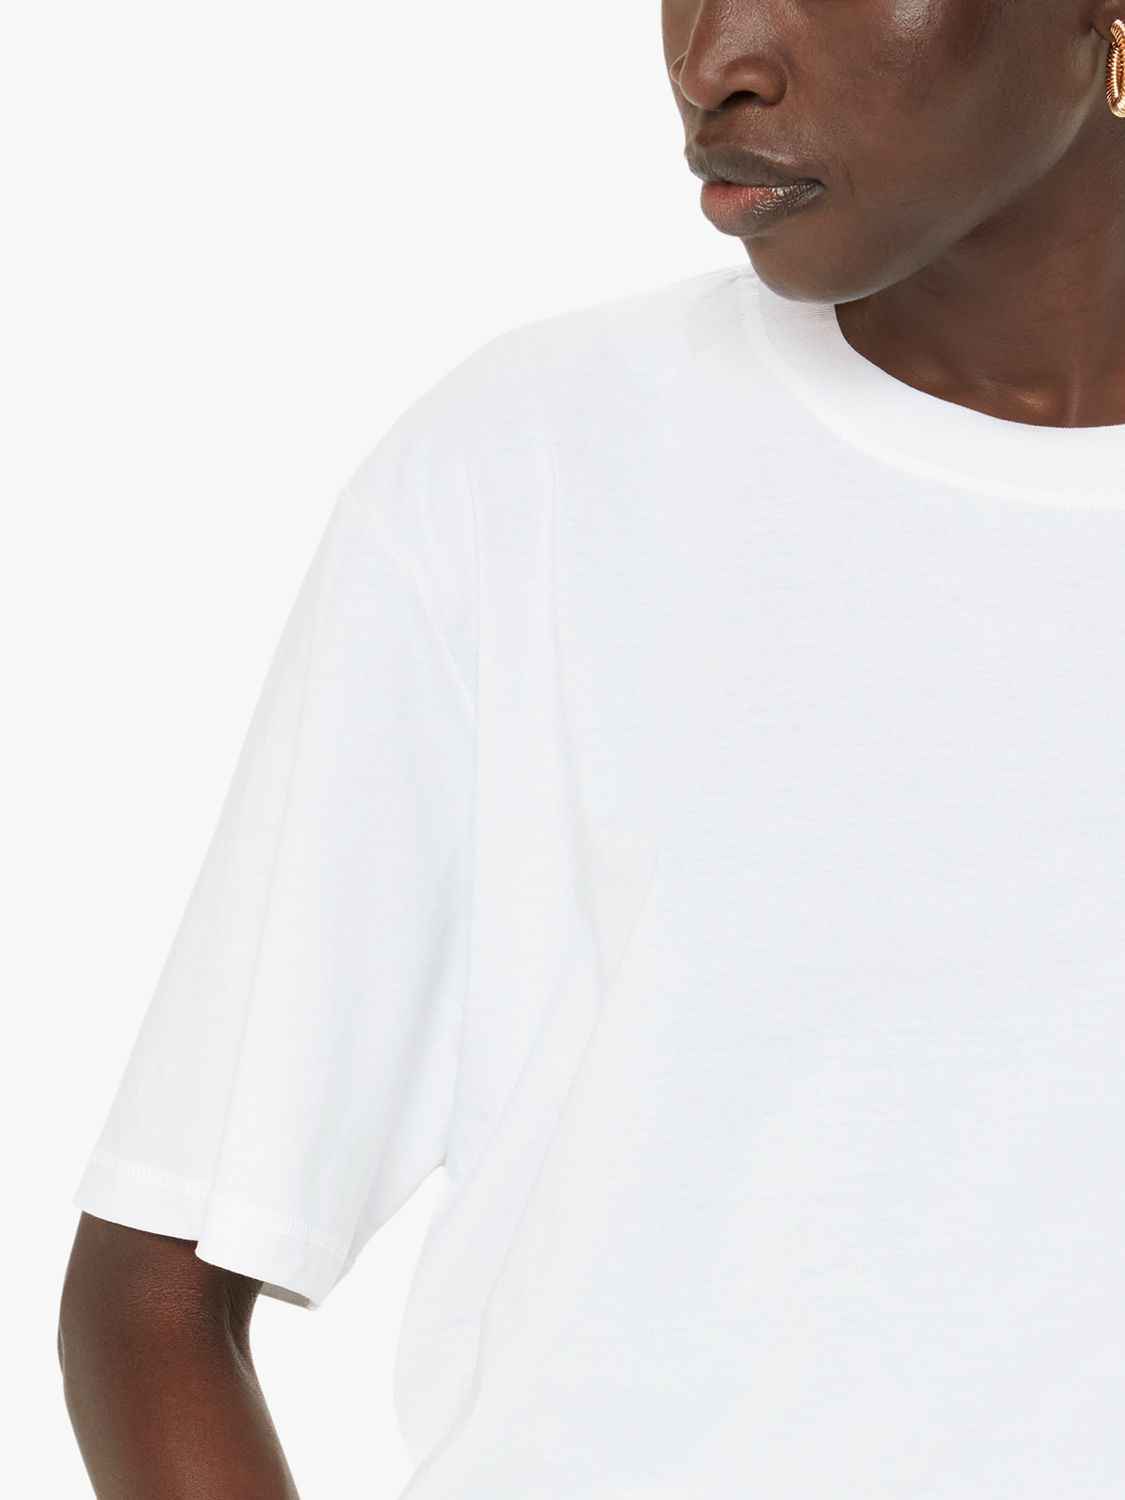 Whistles Boyfriend Oversized T-Shirt, White, XS